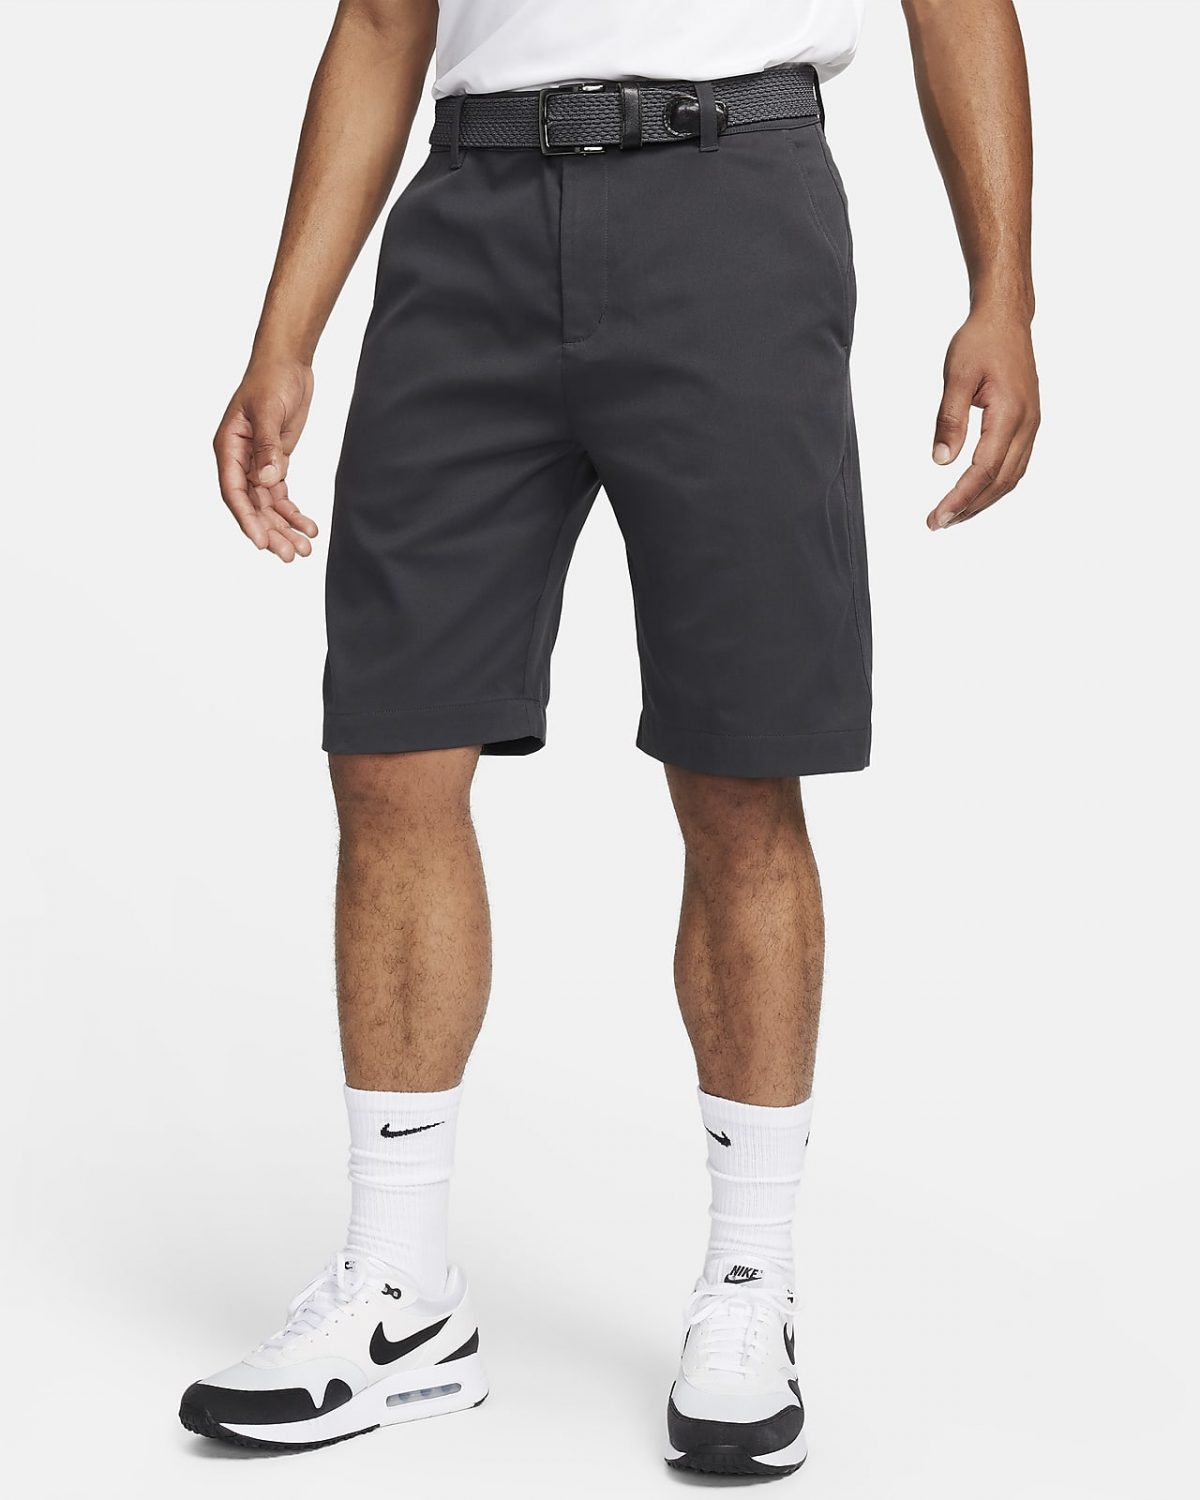 Мужские шорты Nike Tour фото